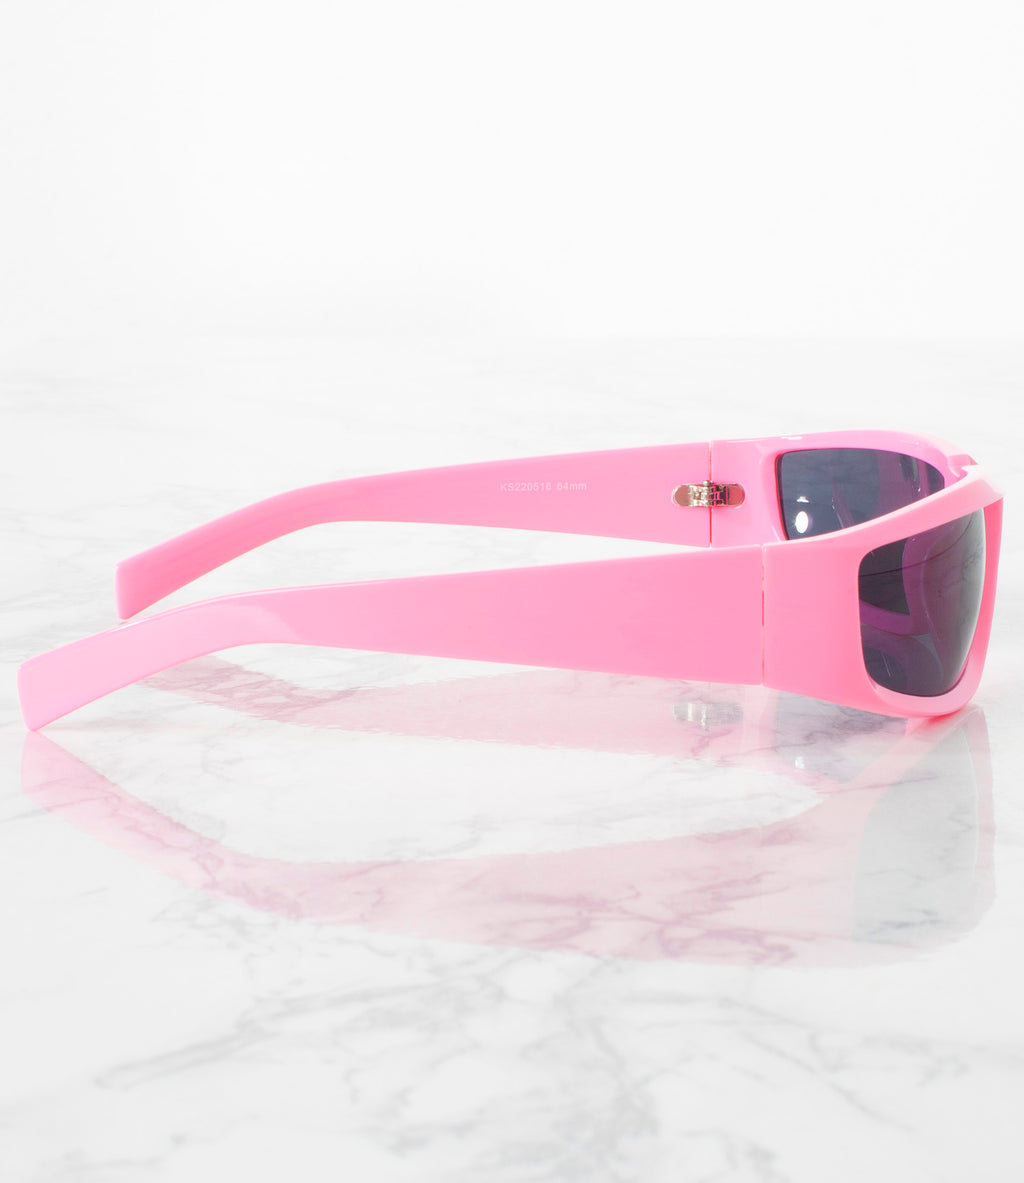 Single Color Sunglasses - KS220516-PINK - Pack of 6 - $2.50/piece